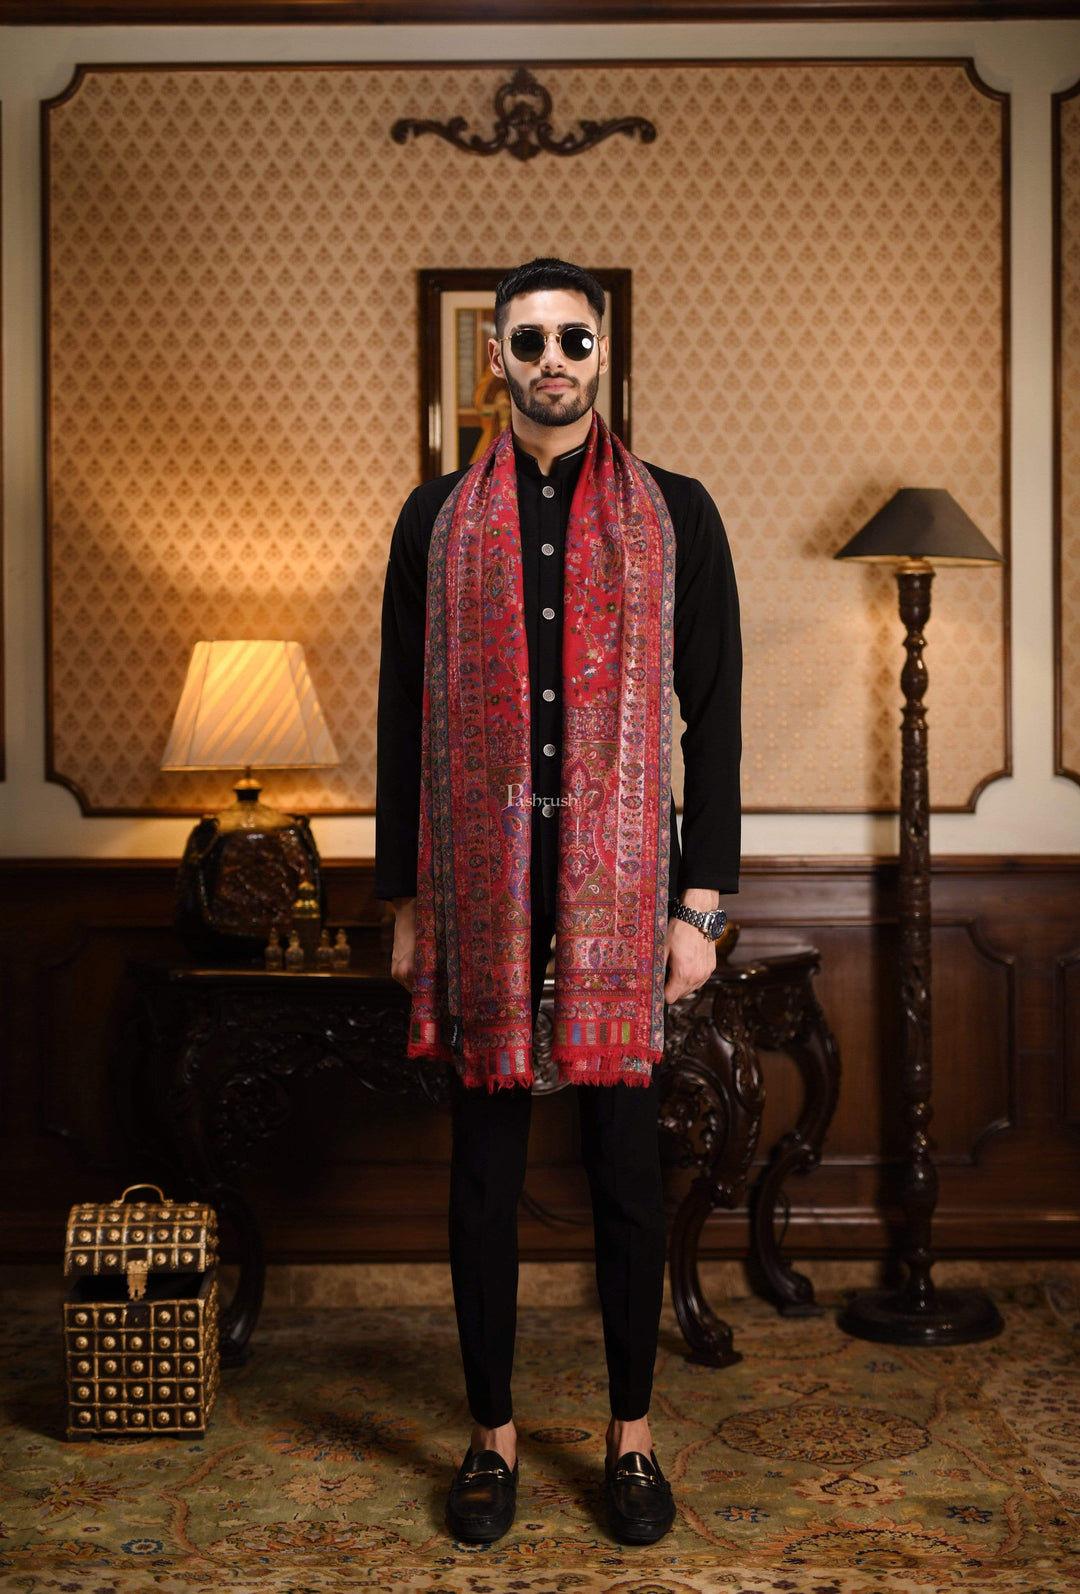 Pashtush India 100x200 Pashtush Mens Kaani Stole, Pure Wool, with Metallic Zari Weave